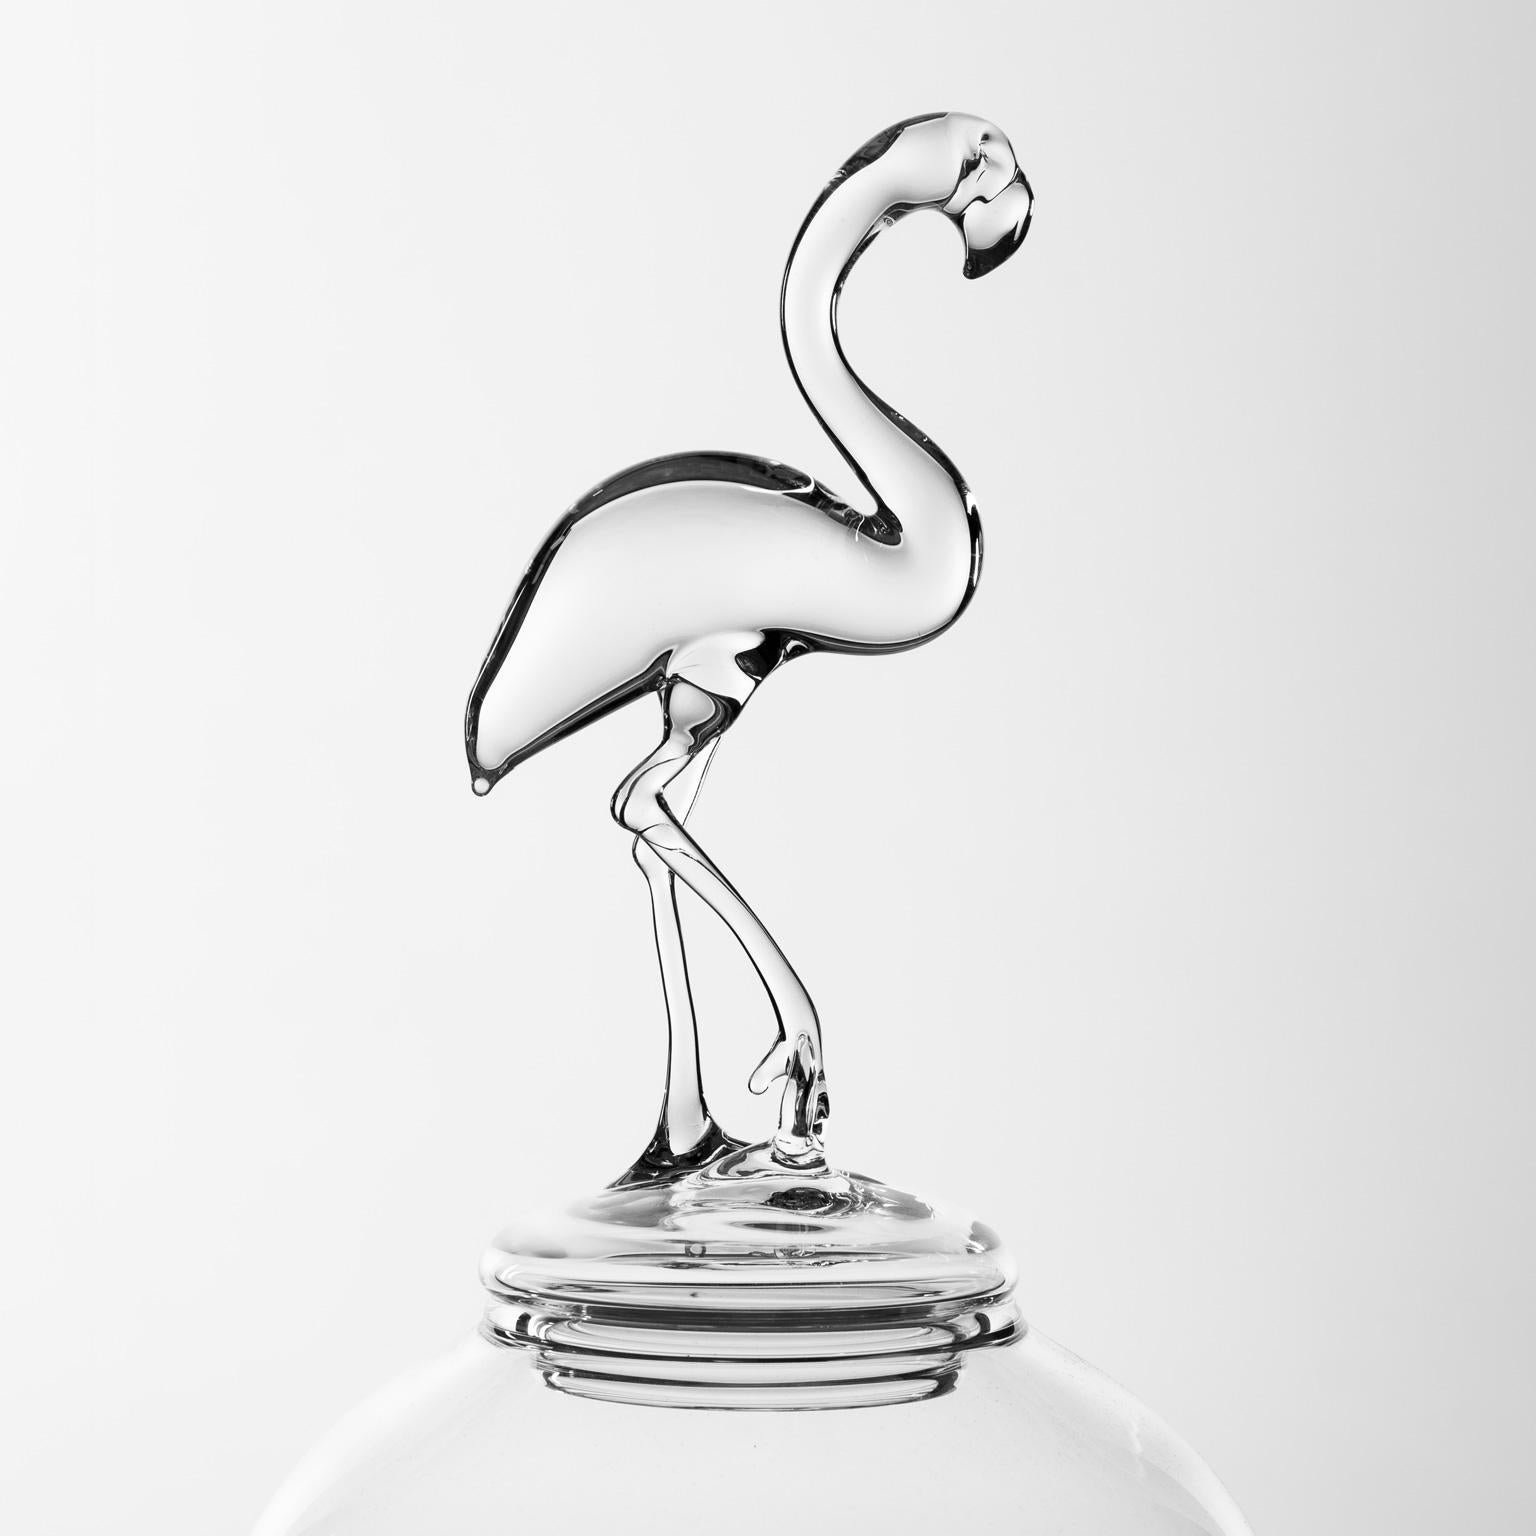 'Flamingo Jar'
A hand blown glass jar by Simone Crestani

